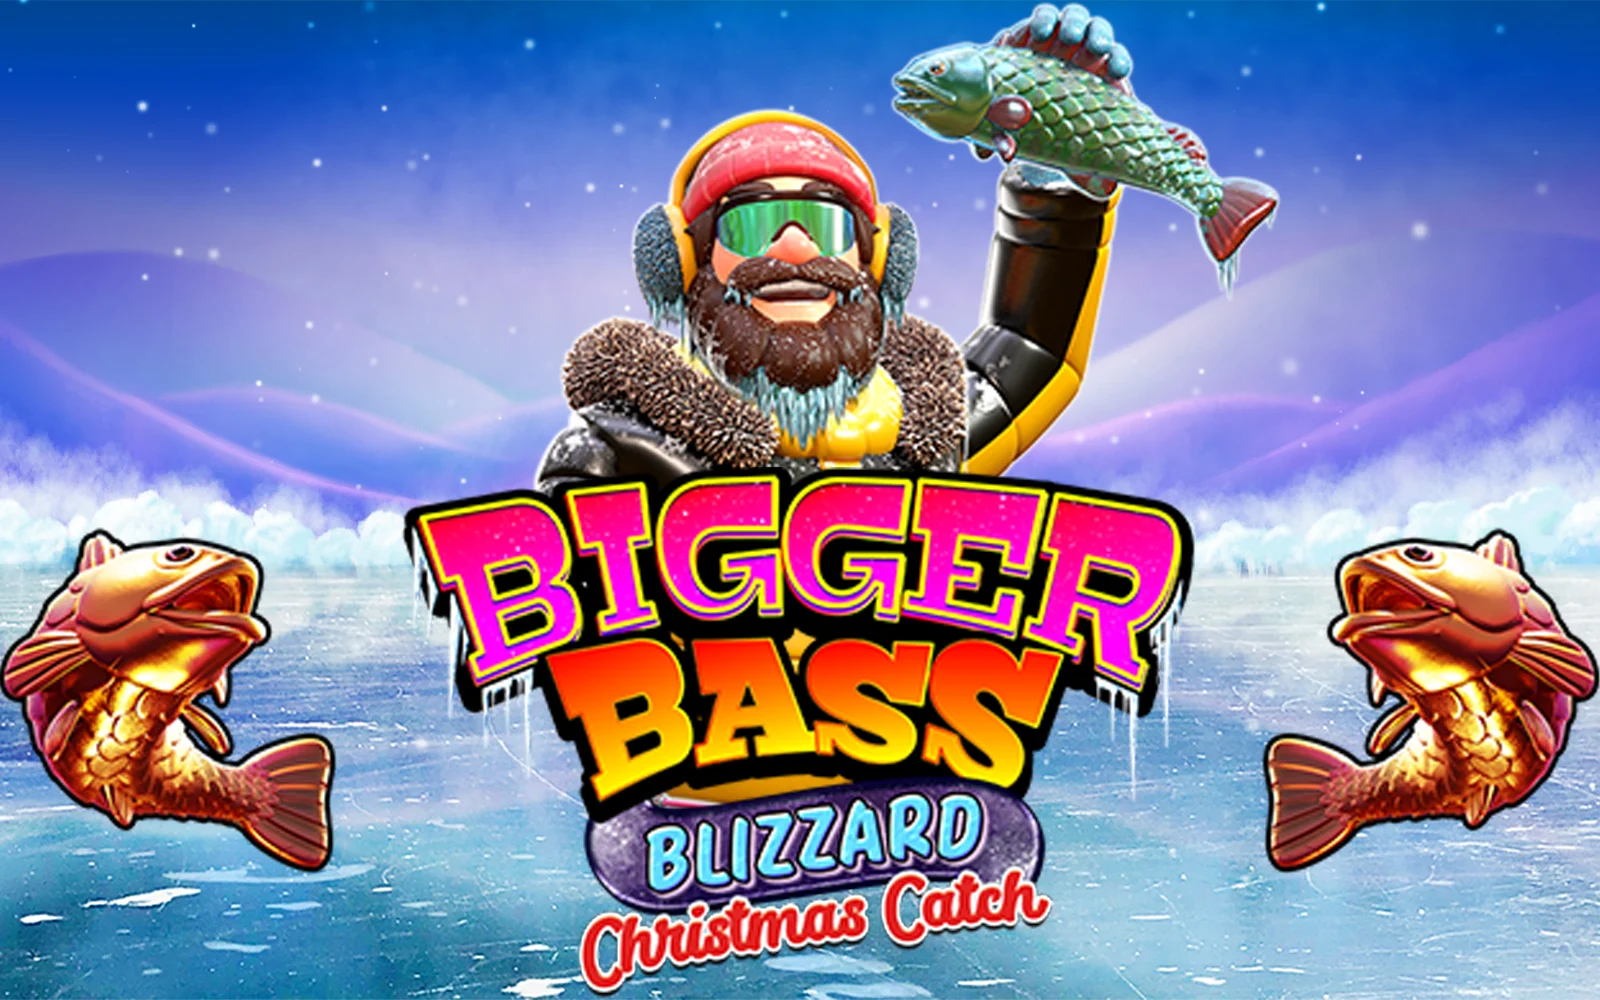 Speel Bigger Bass Blizzard - Christmas Catch™ op Starcasino.be online casino